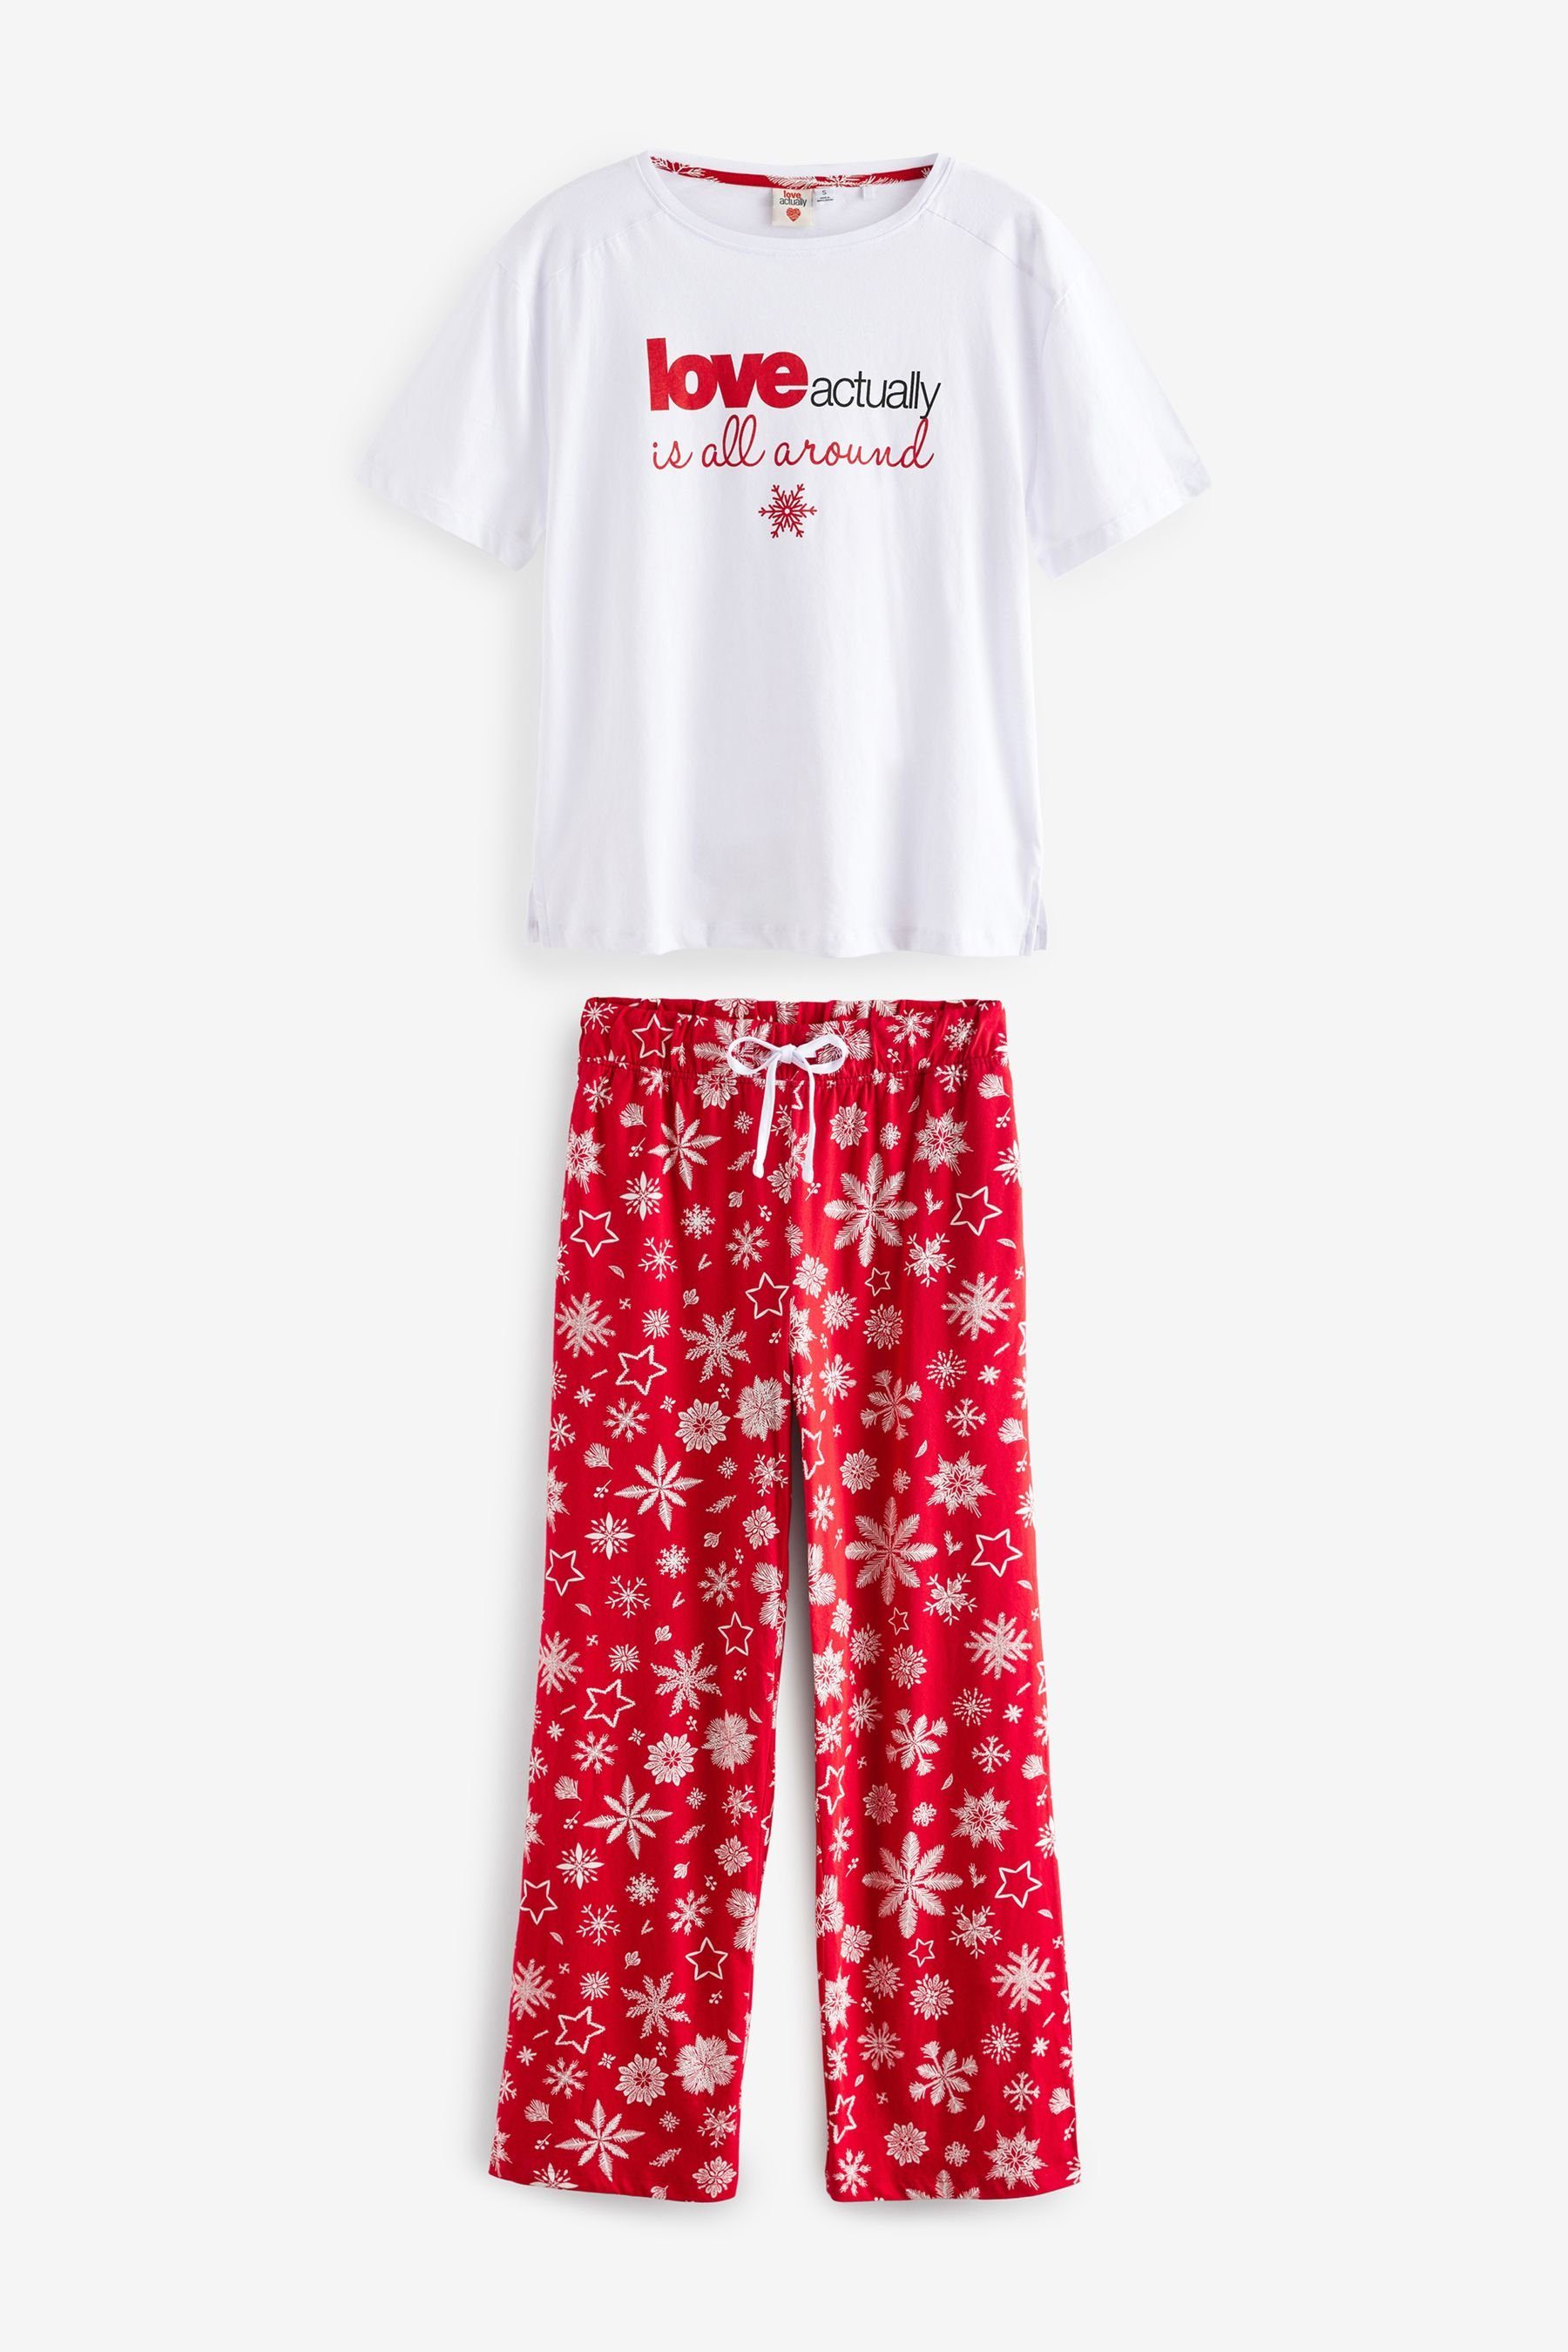 Actually Pyjama Next Kurzärmeliger (2 Baumwoll-Schlafanzug, Love tlg)